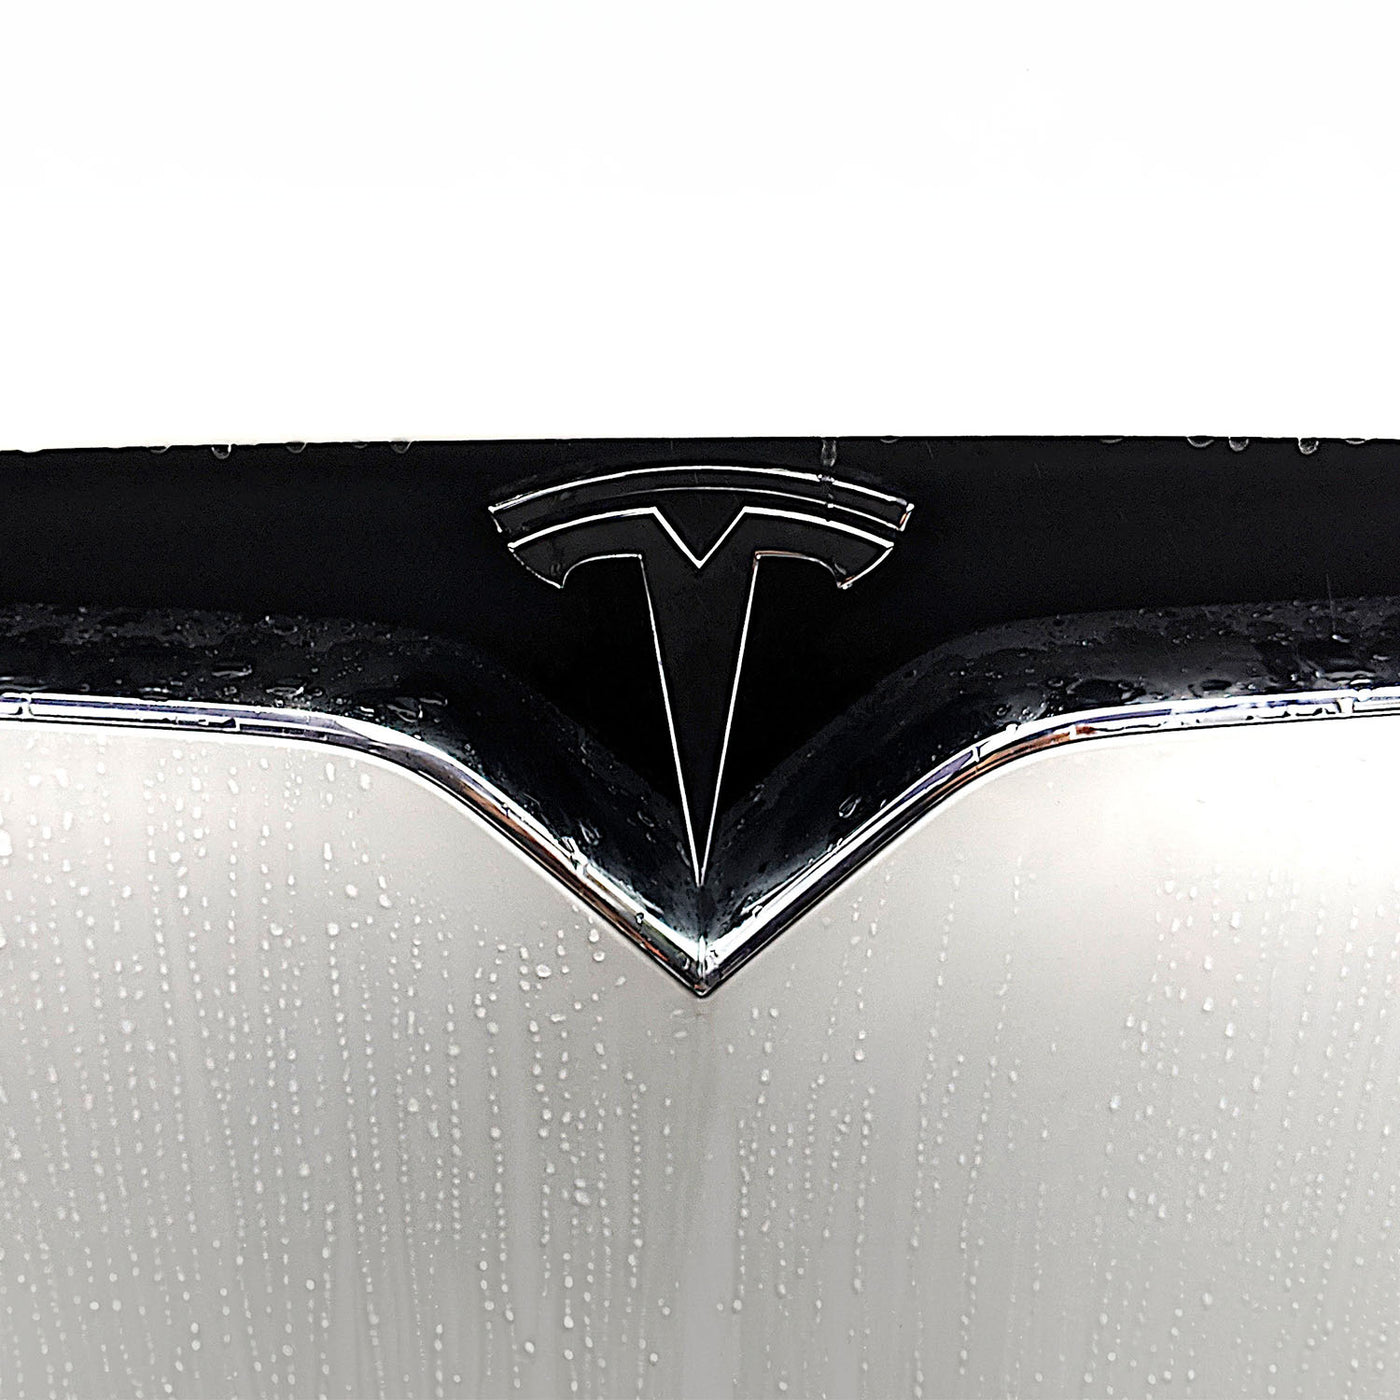 Model X Frunk Logo Decal